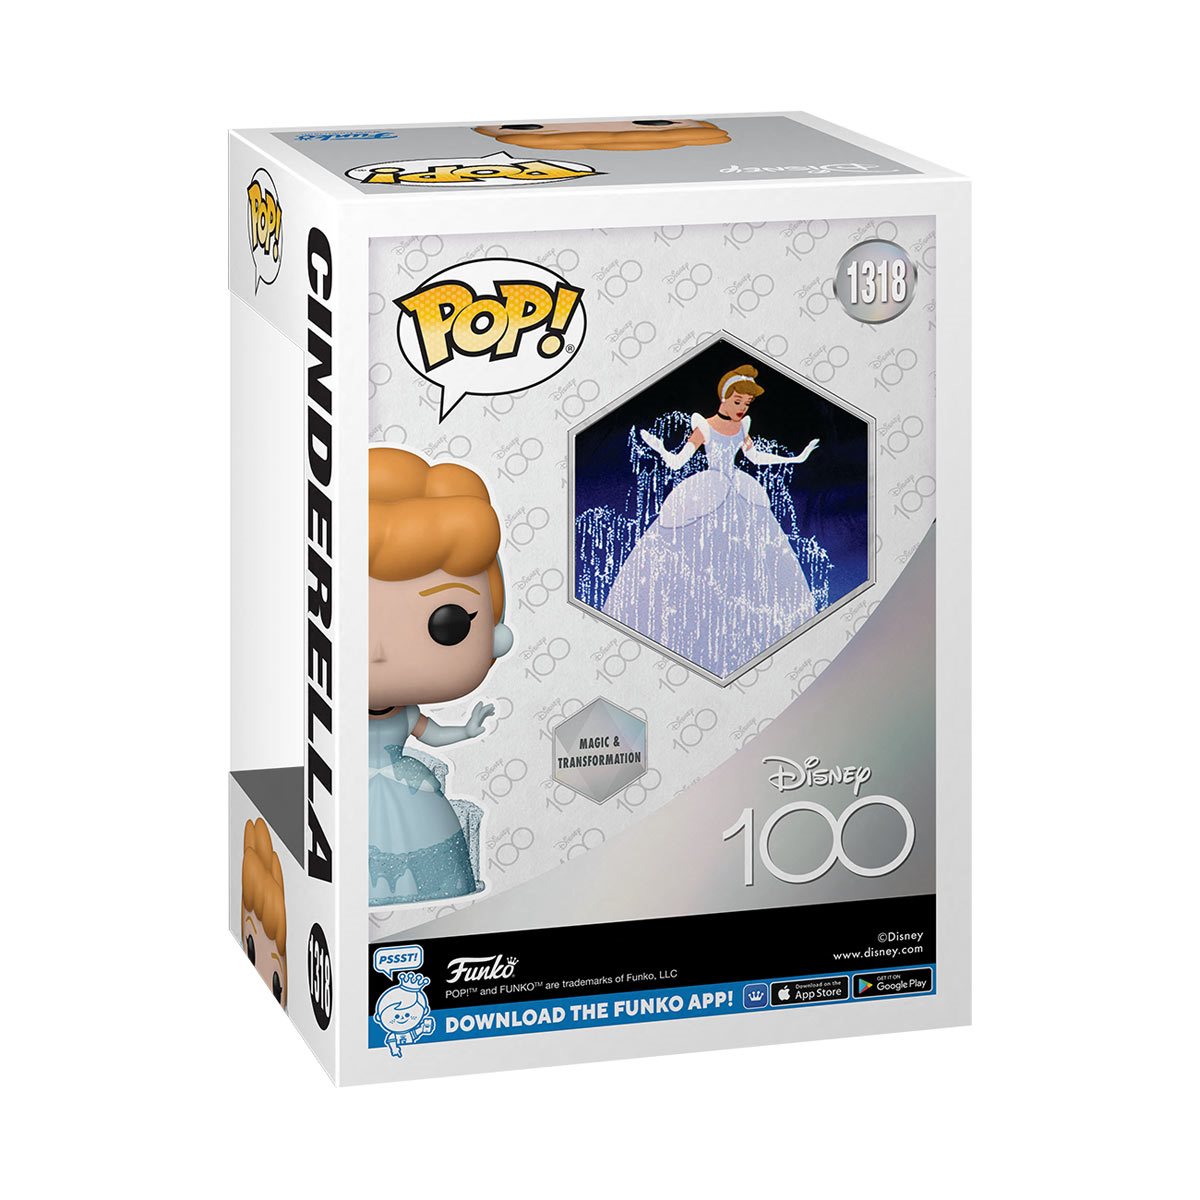 Funko Pop! Disney 100 [1318] - Cinderella (Diamond) (Special